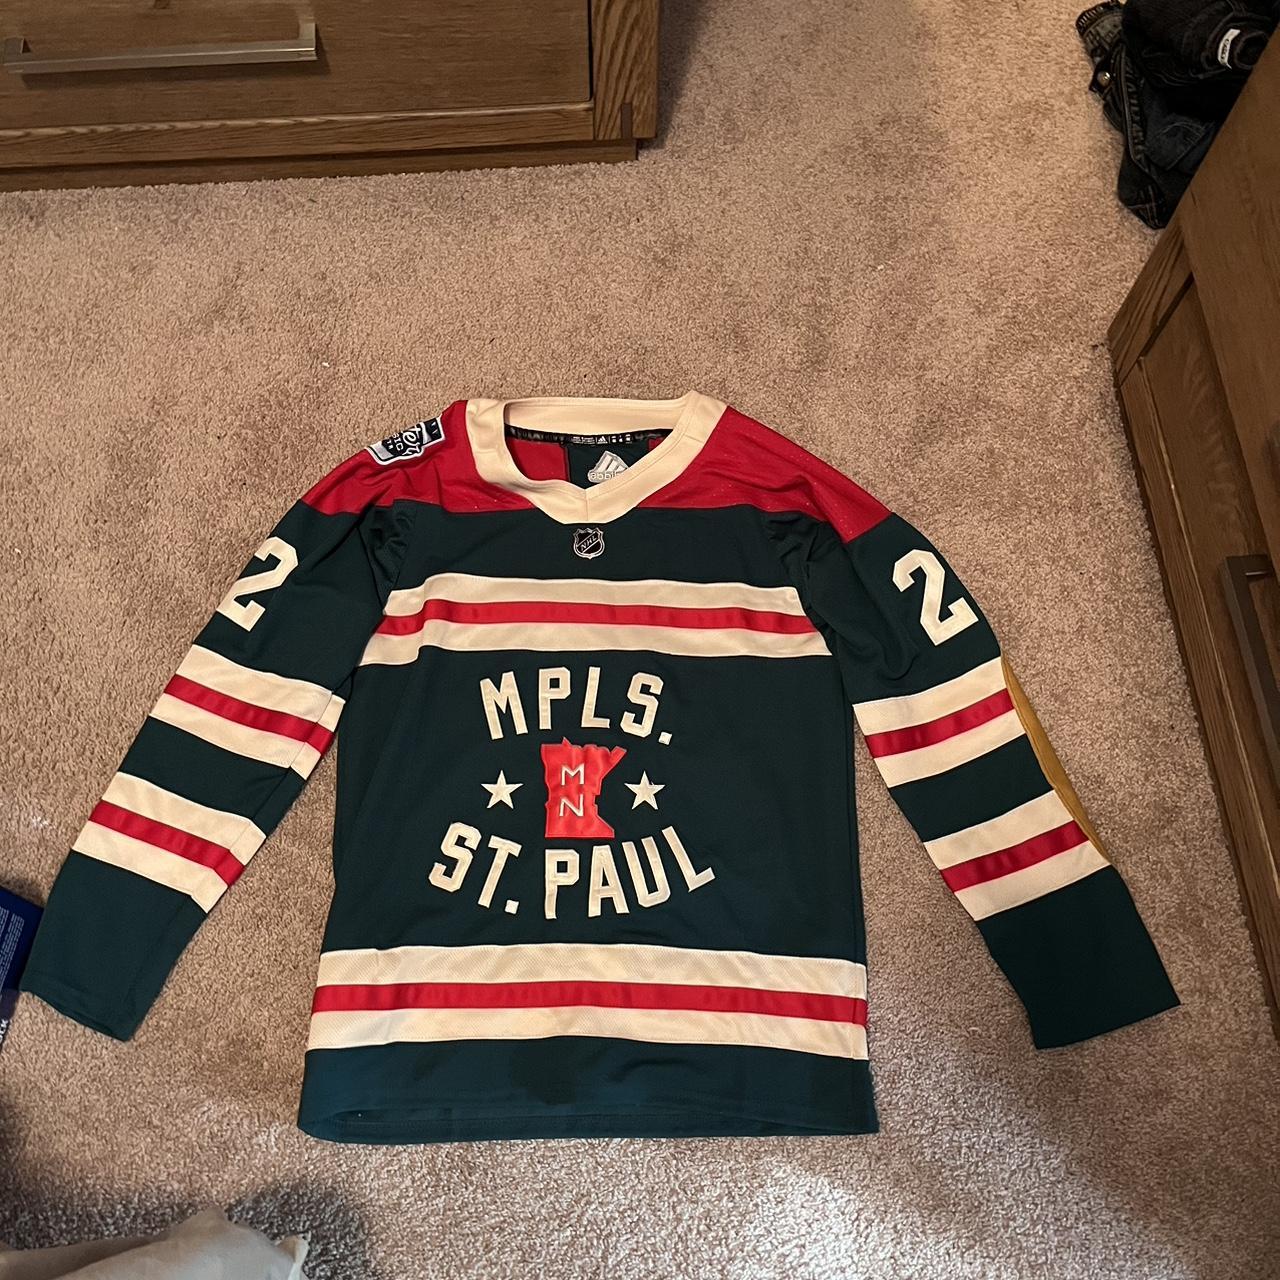 NHL Jerseys for sale in Minneapolis, Minnesota